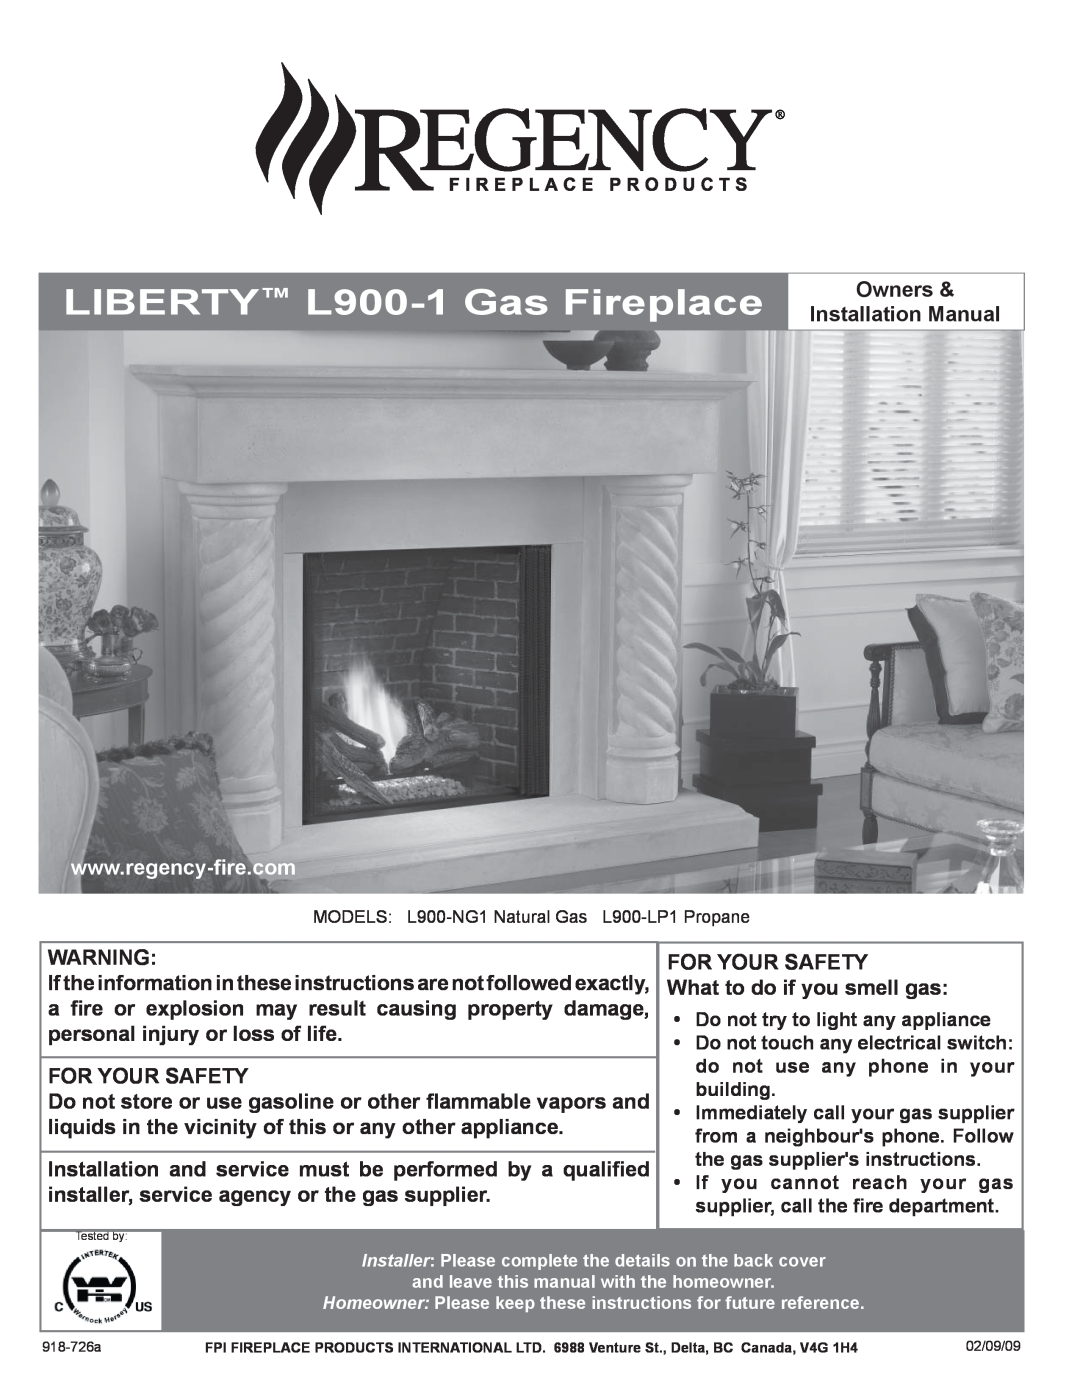 Regency installation manual LIBERTY L900-1Gas Fireplace 